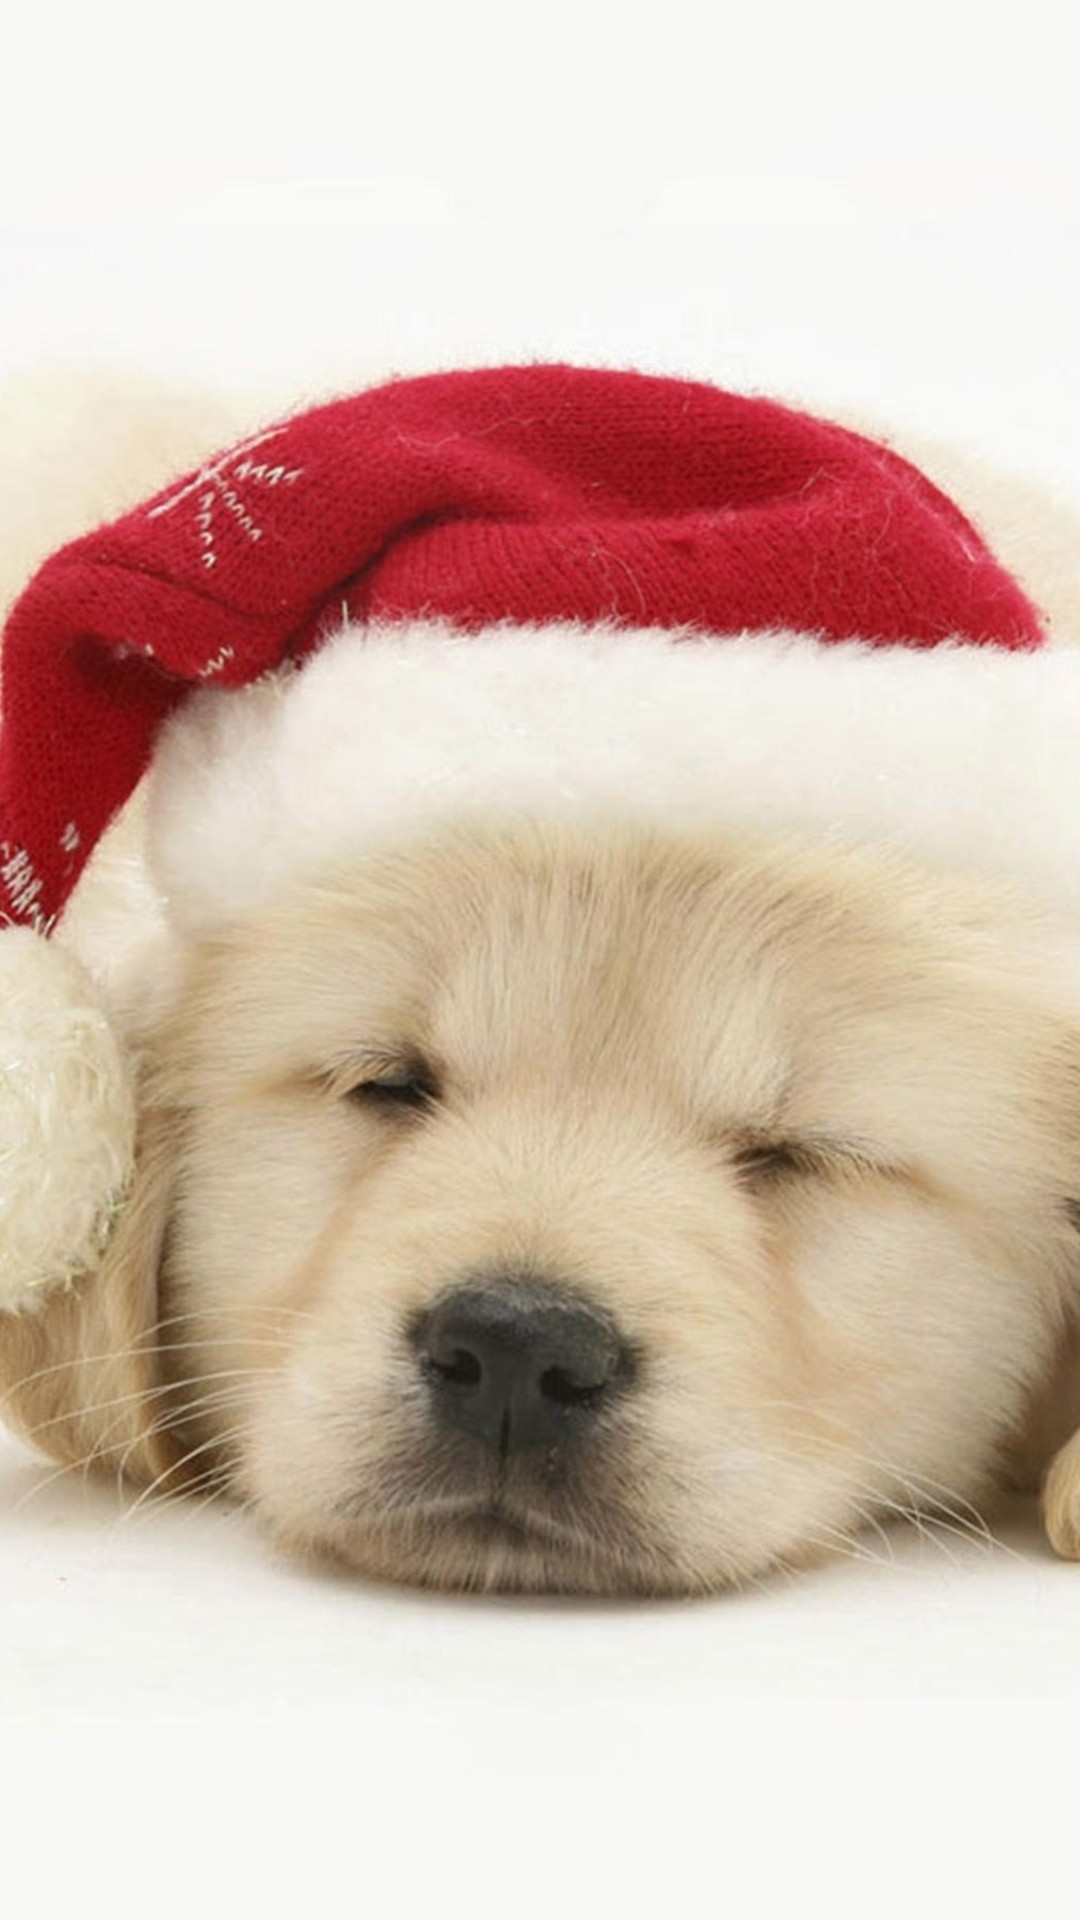 1080x1920 Merry Christmas-Dog - Dogs Wallpaper ID 1287371 - Desktop Nexus Animals